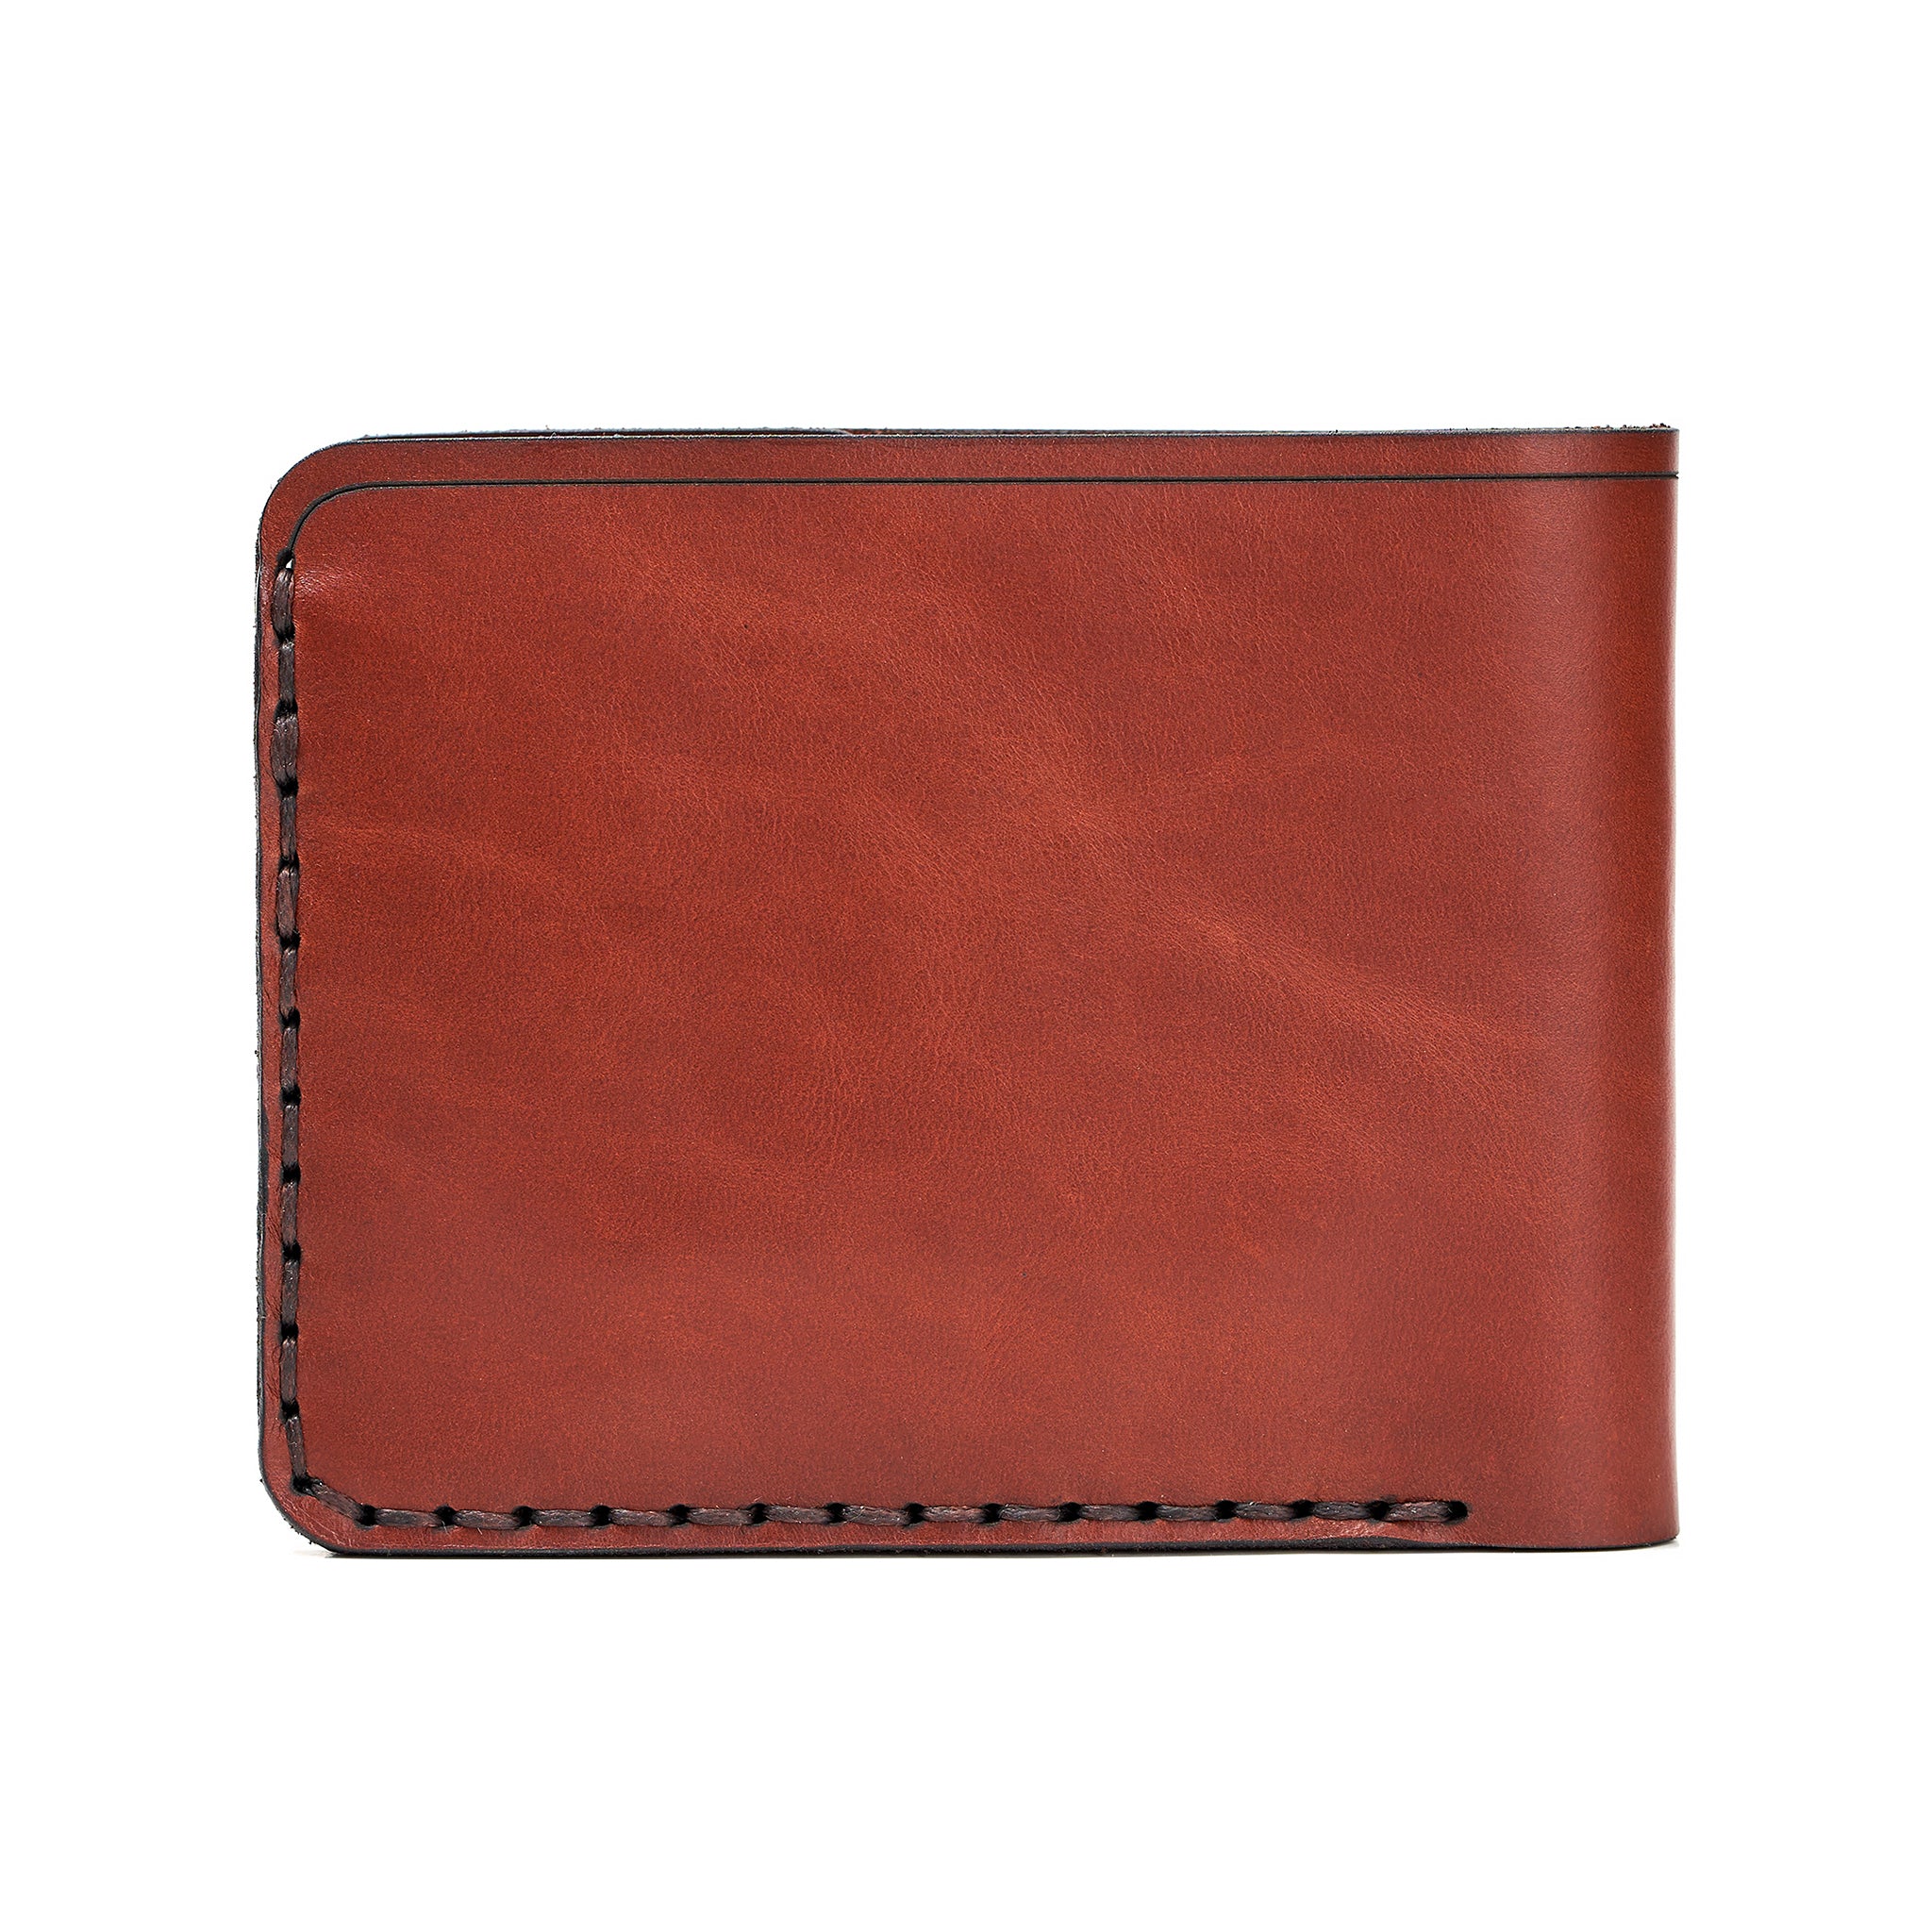 Handmade Men's Wallet 6 Card Slots Red Brick 31707924922519